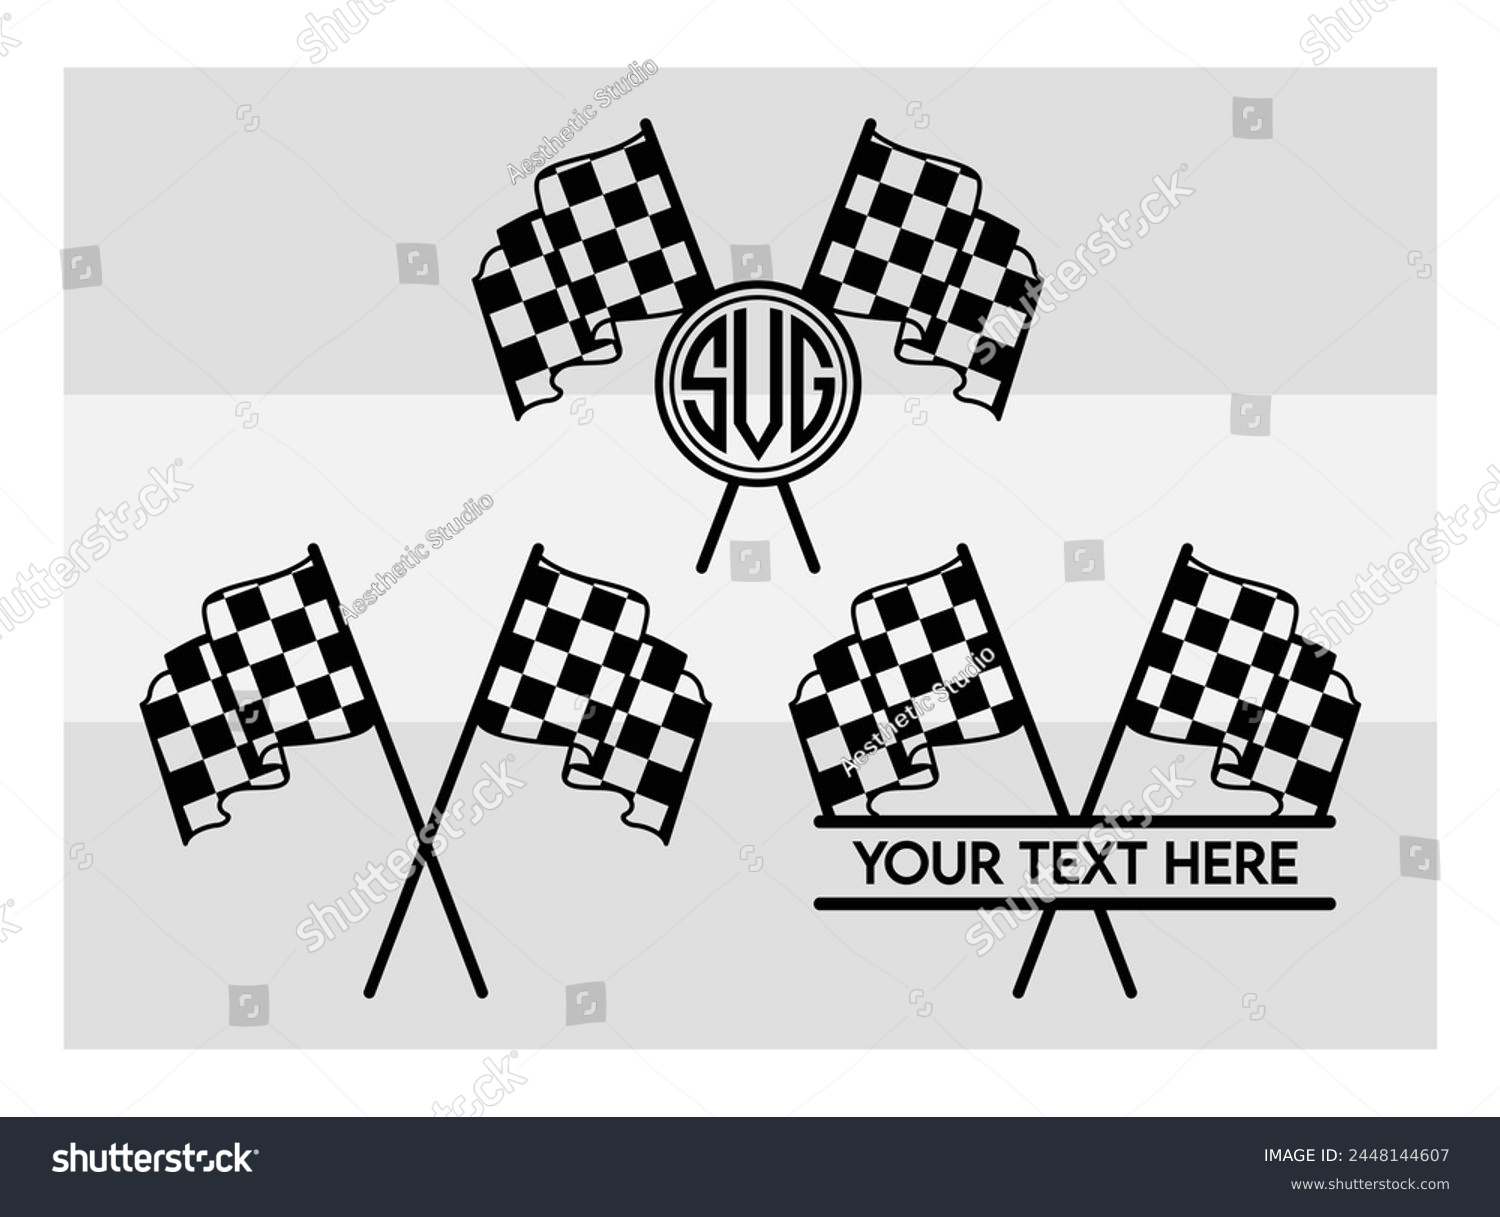 SVG of Racing Flag, Racing Flag Silhouette, Race, Sports, Racing Game, Flag, Checkered Flag, Sports Racing, Game, vector, eps, svg